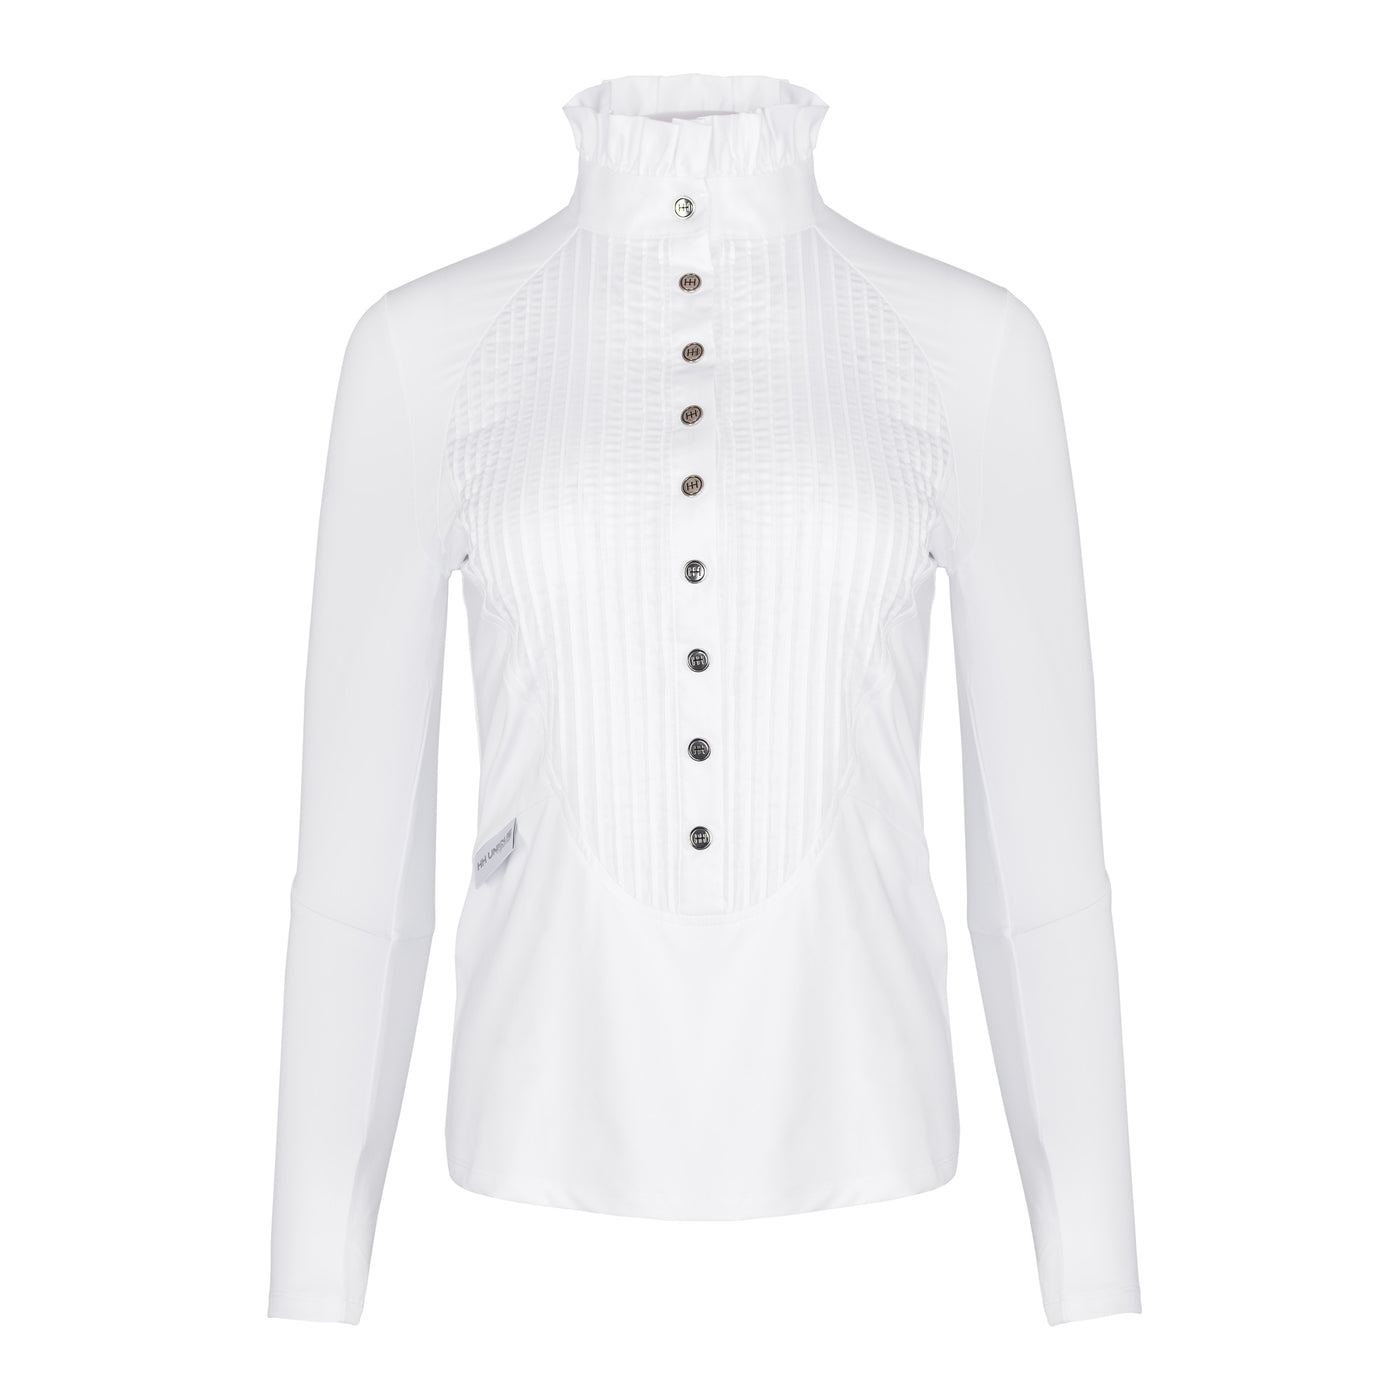 White Long Sleeve Tudor Shirt